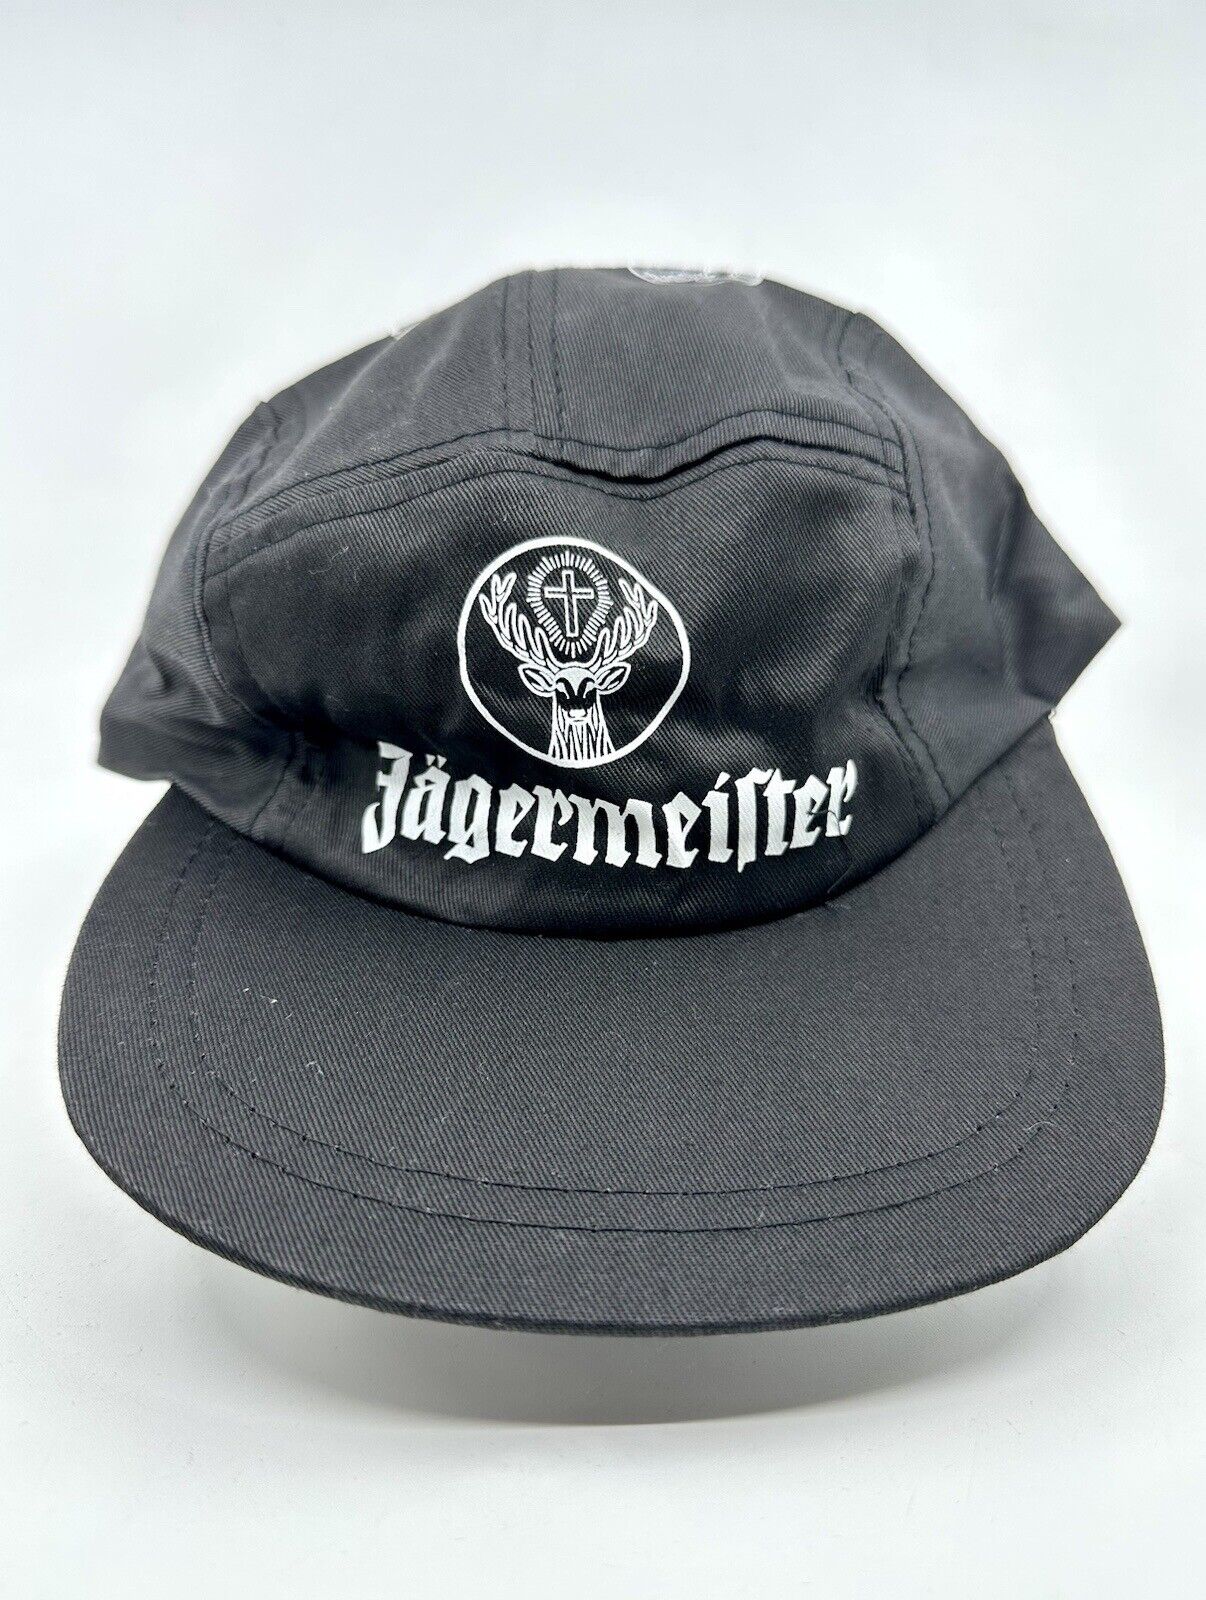 JAGERMEISTER Beer Painters Hat Black Cap Rare Style Vintage 1990s Promo NOS